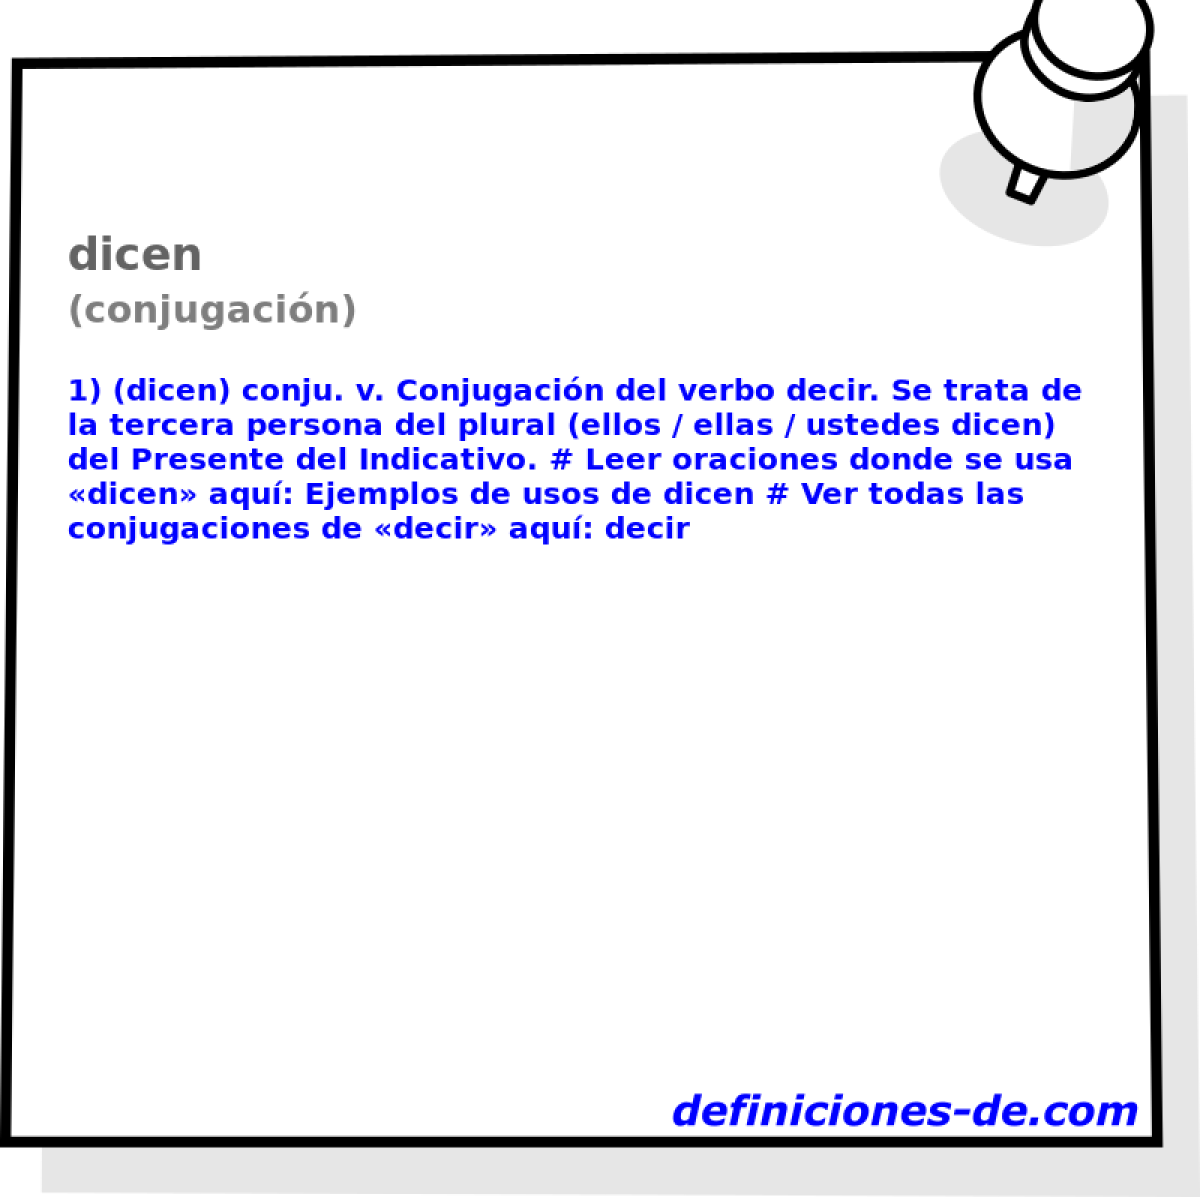 dicen (conjugacin)